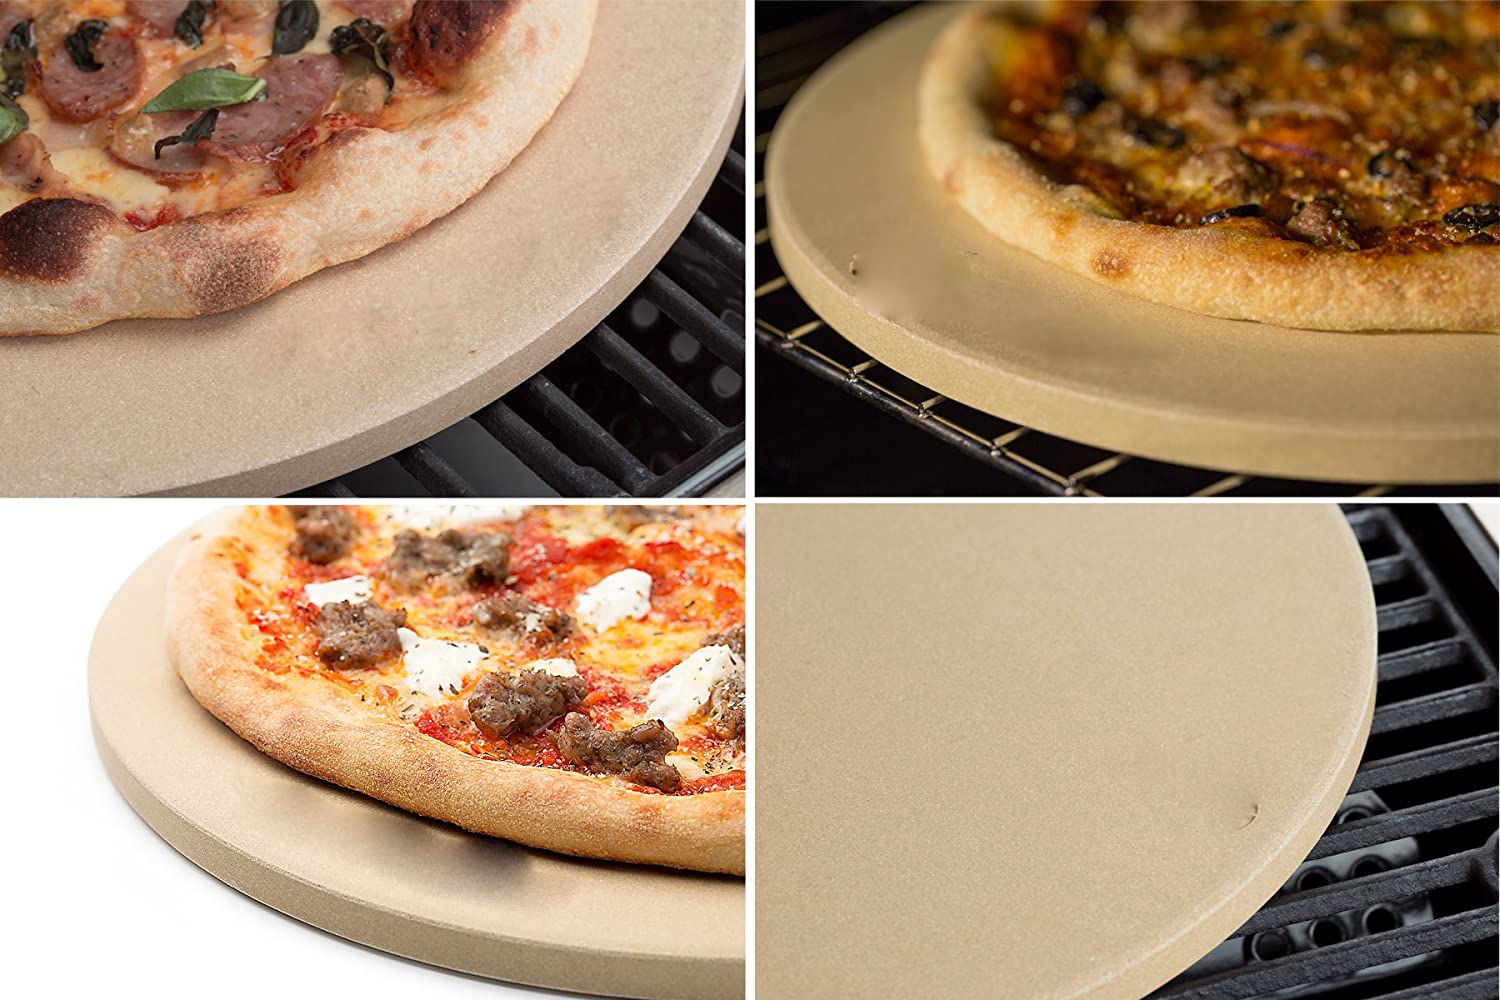 BBQ Rectangular Rectangle Square Round Black White Cordierite Ceramic Pizza Oven Baking Grilling Refractory Pizza stone